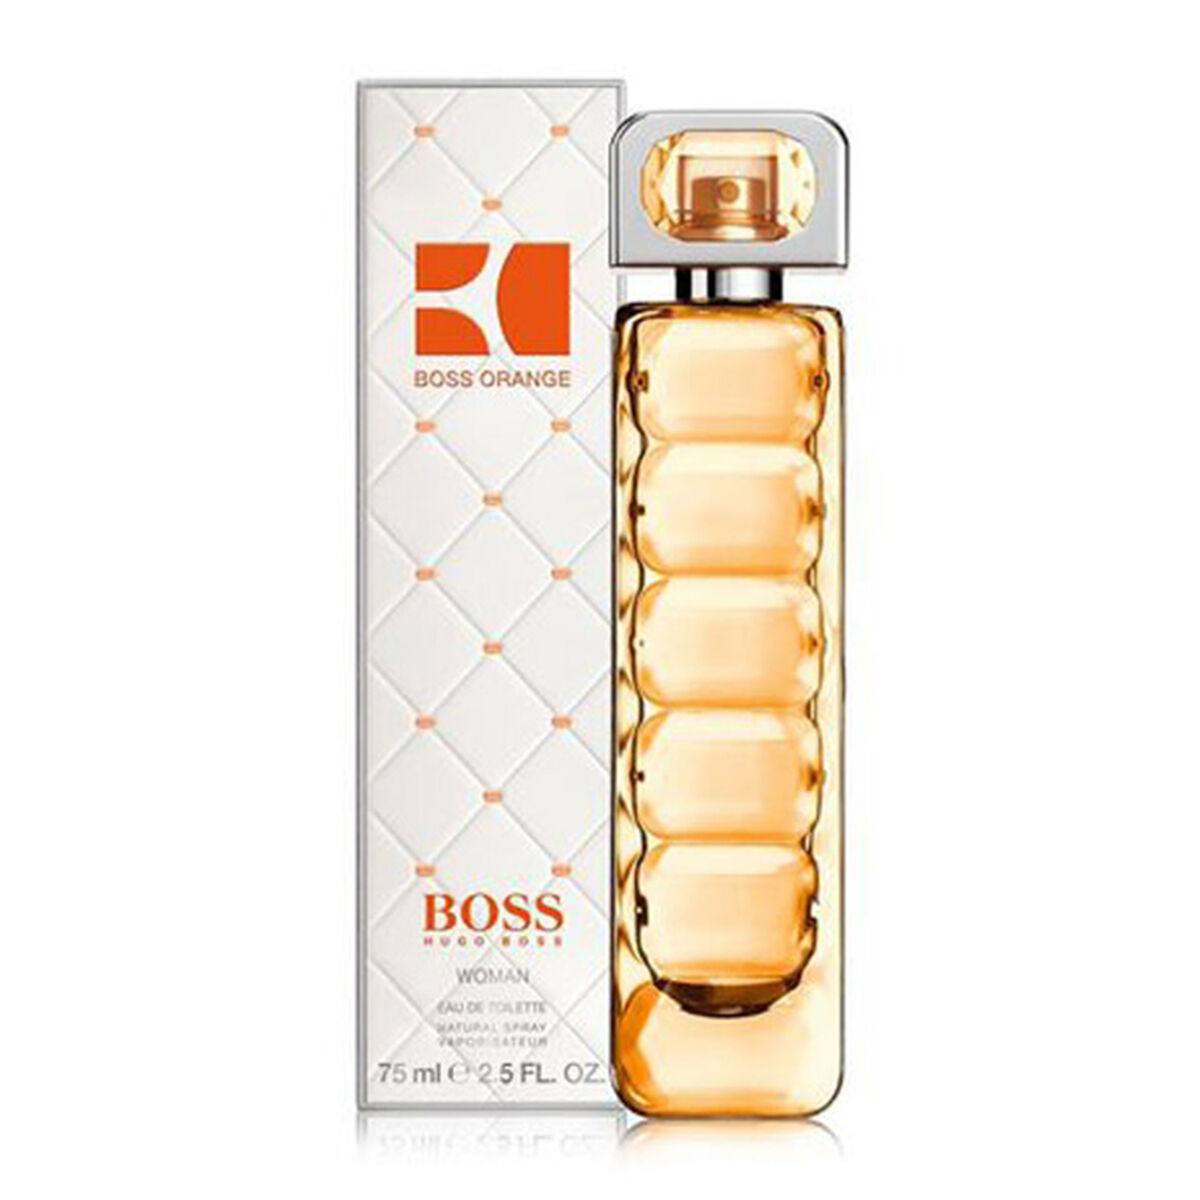 Perfume Hugo Boss Orange Woman EDT 75 ml